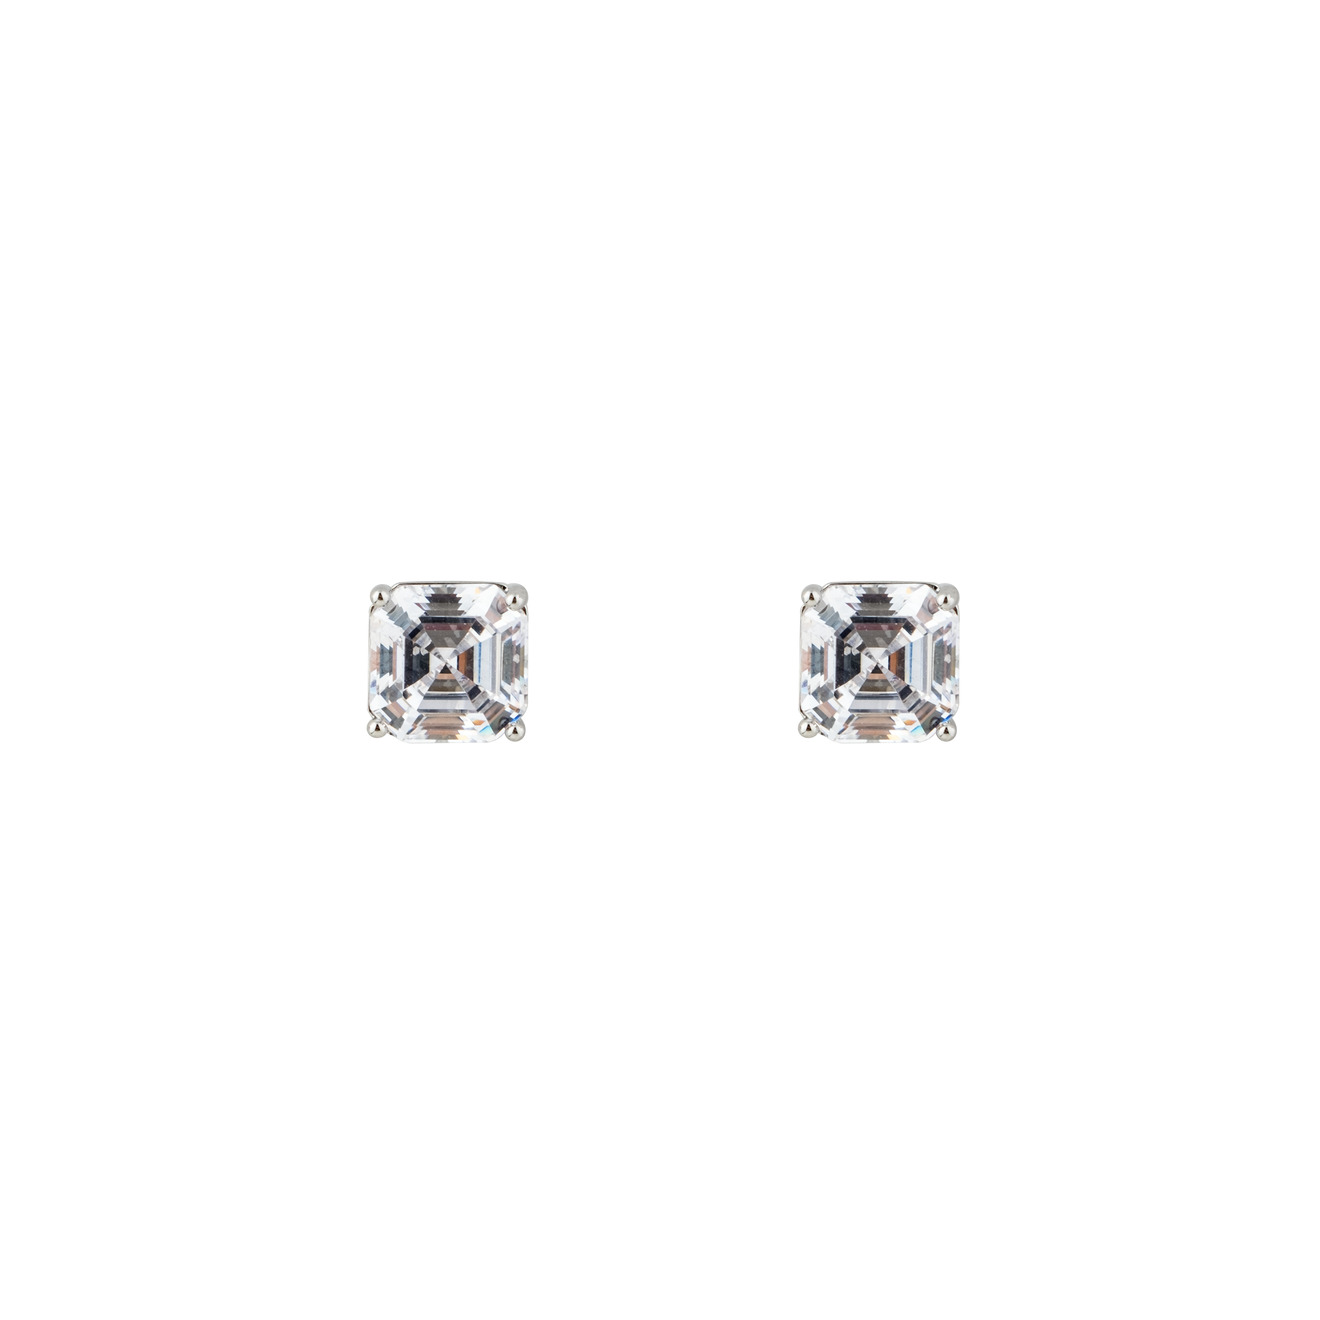 Herald Percy Серебристые серьги с белыми кристаллами herald percy серебристые серьги с кристаллами багетами